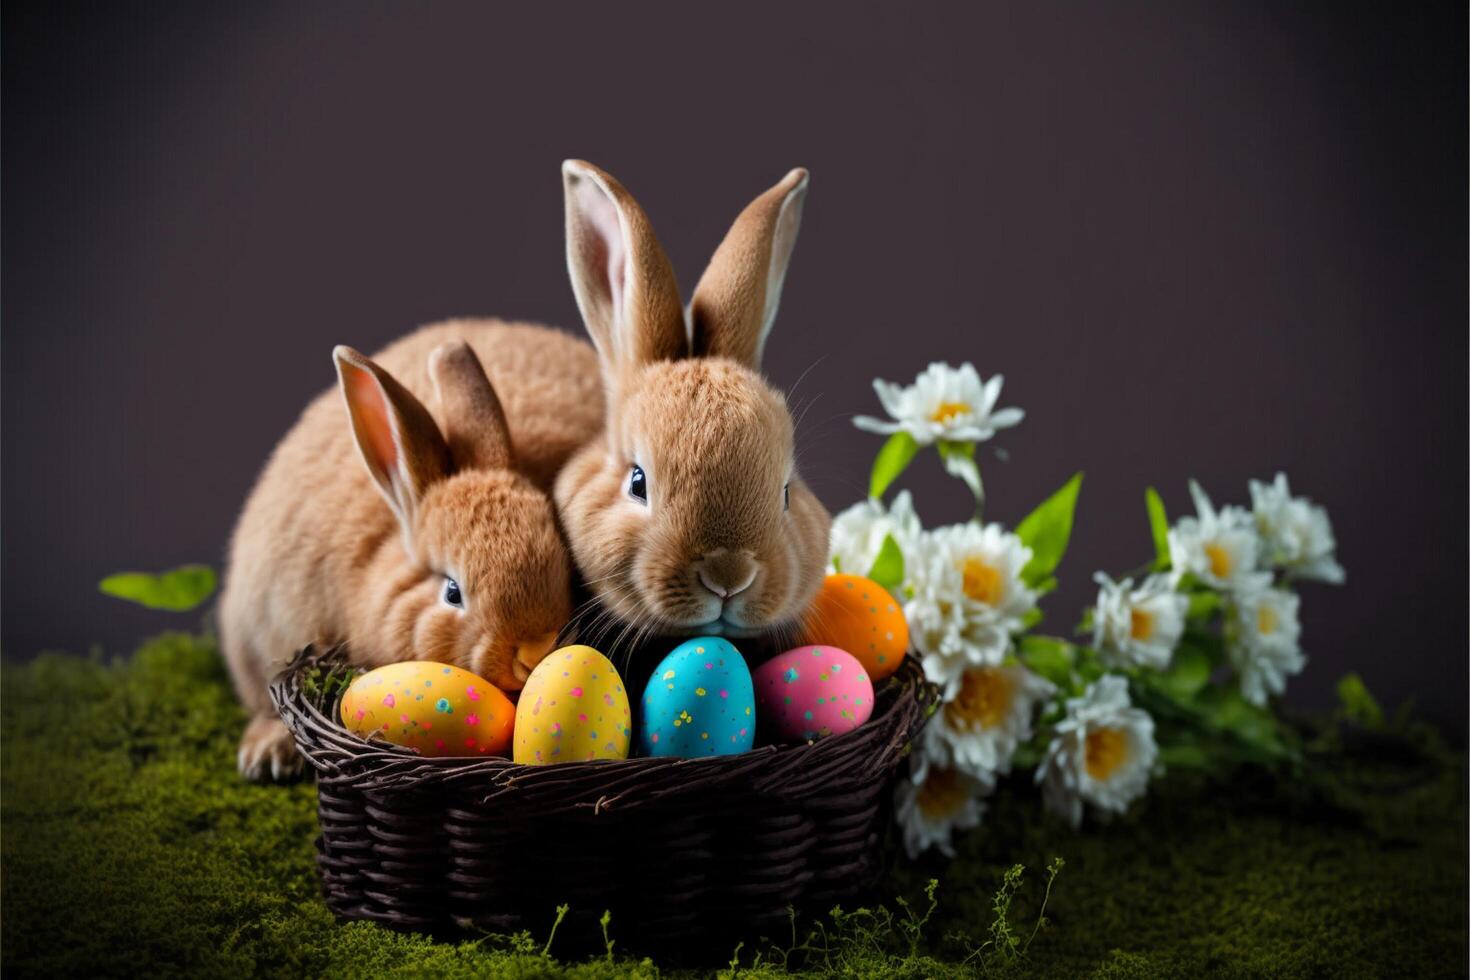 ai imágenes de contento Pascua de Resurrección con Pascua de Resurrección huevo y Pascua de Resurrección conejito foto